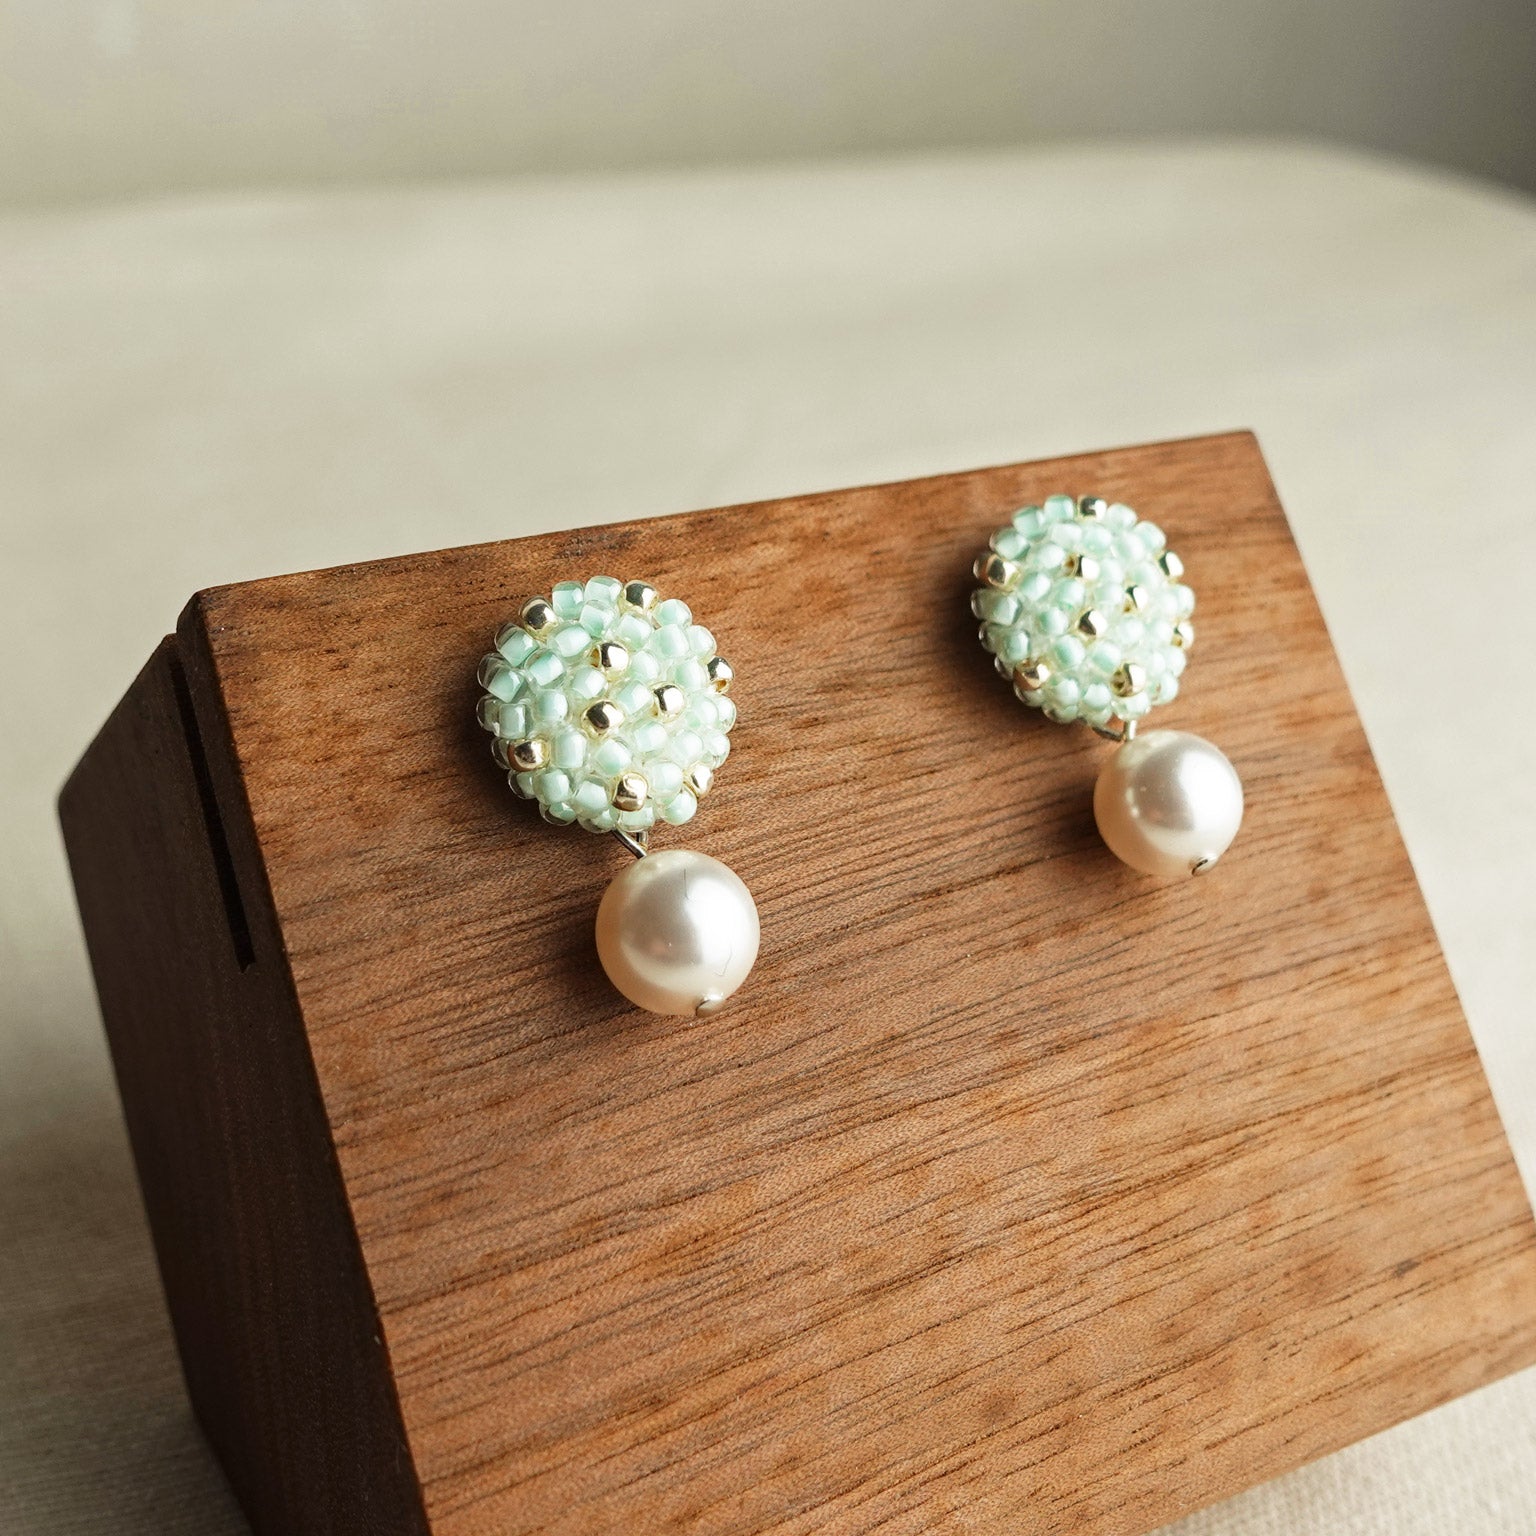 Mariota Drop Earrings in Mint Green Display